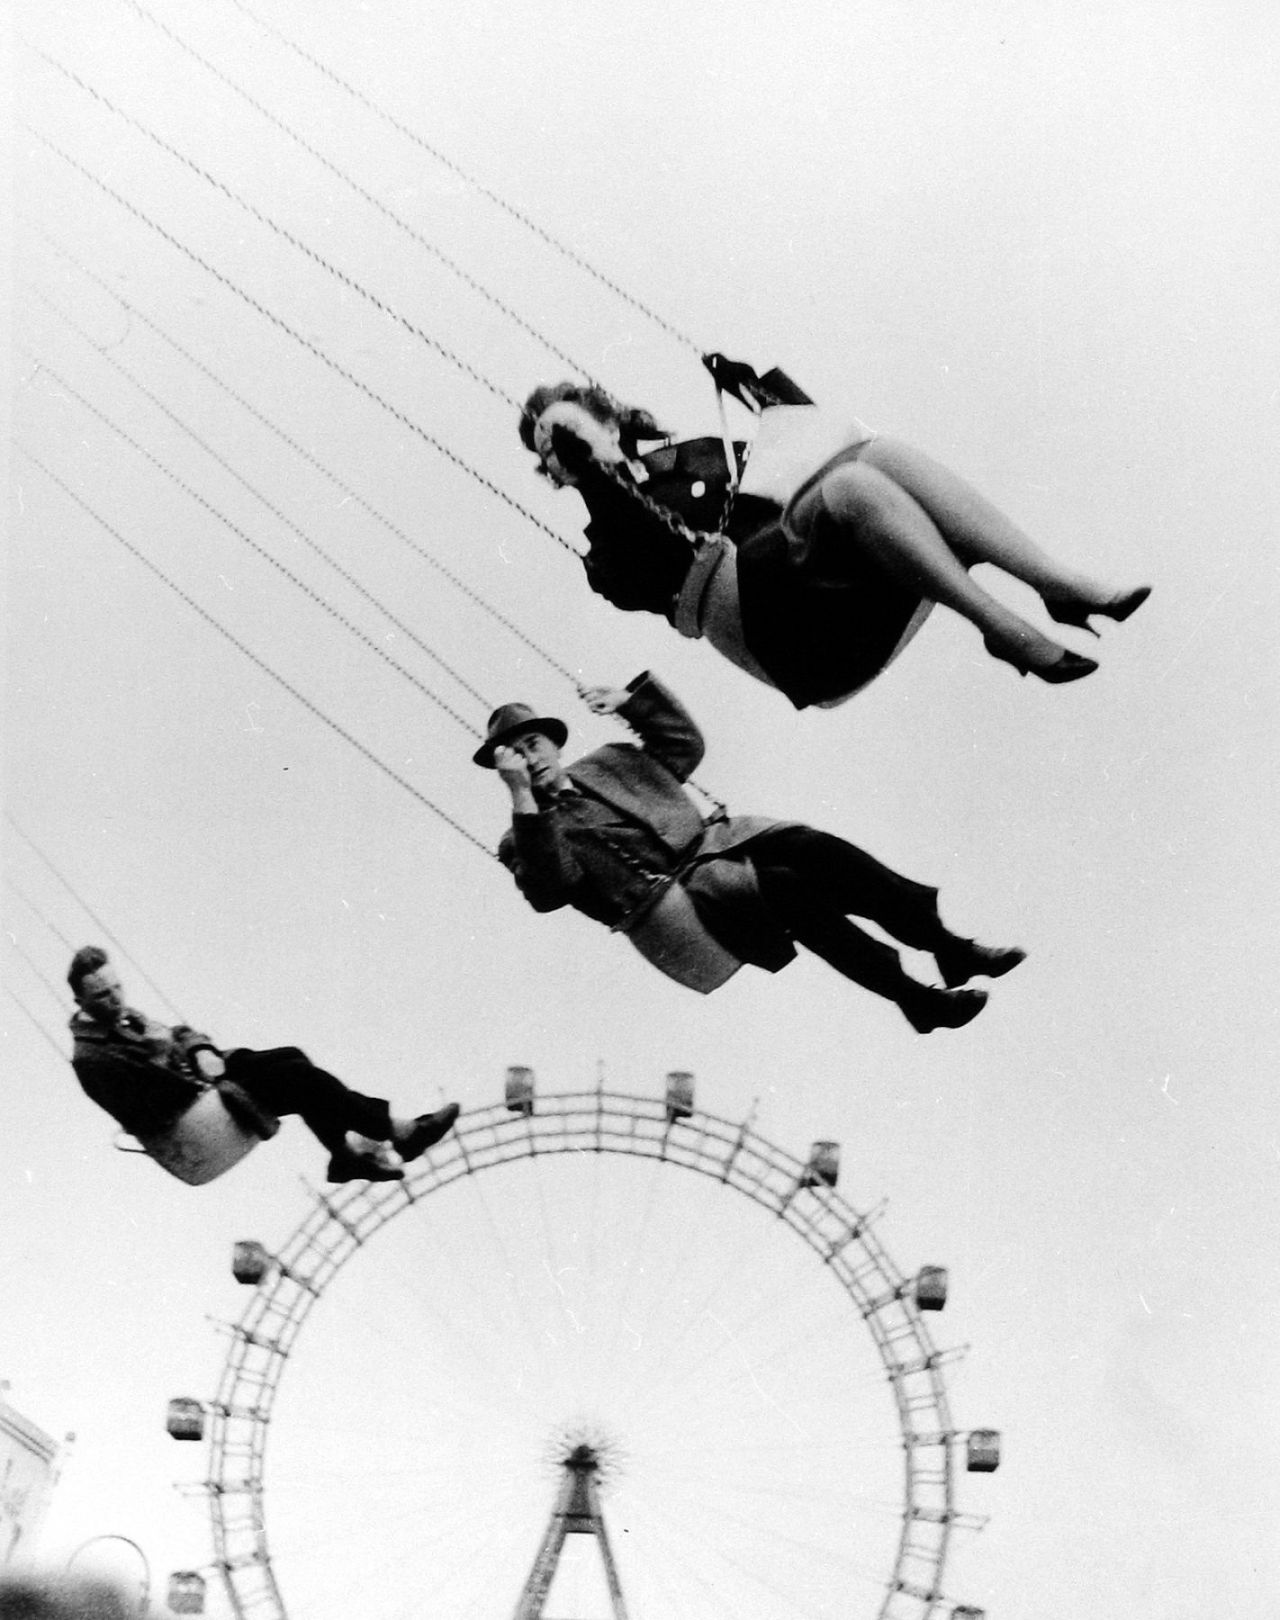 Henry Wolf. Vienna Ferris Wheel from Orson Welles’ “The Third Man”, 1957